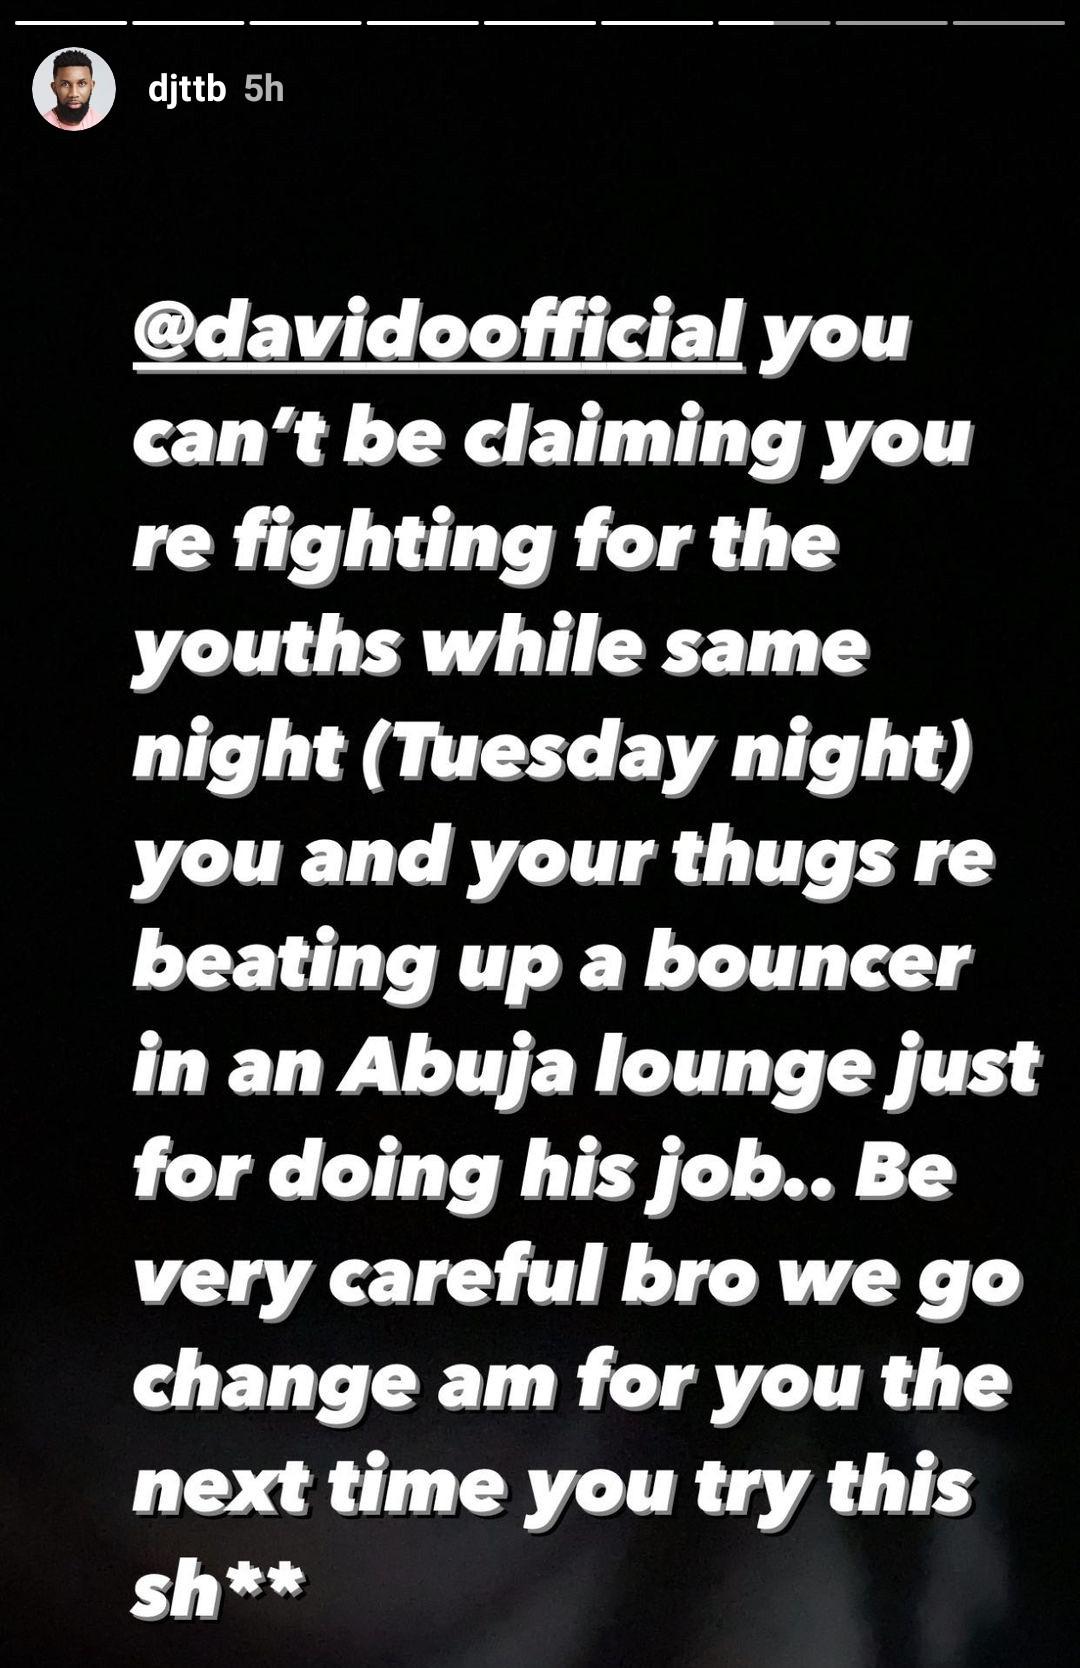 davido called out